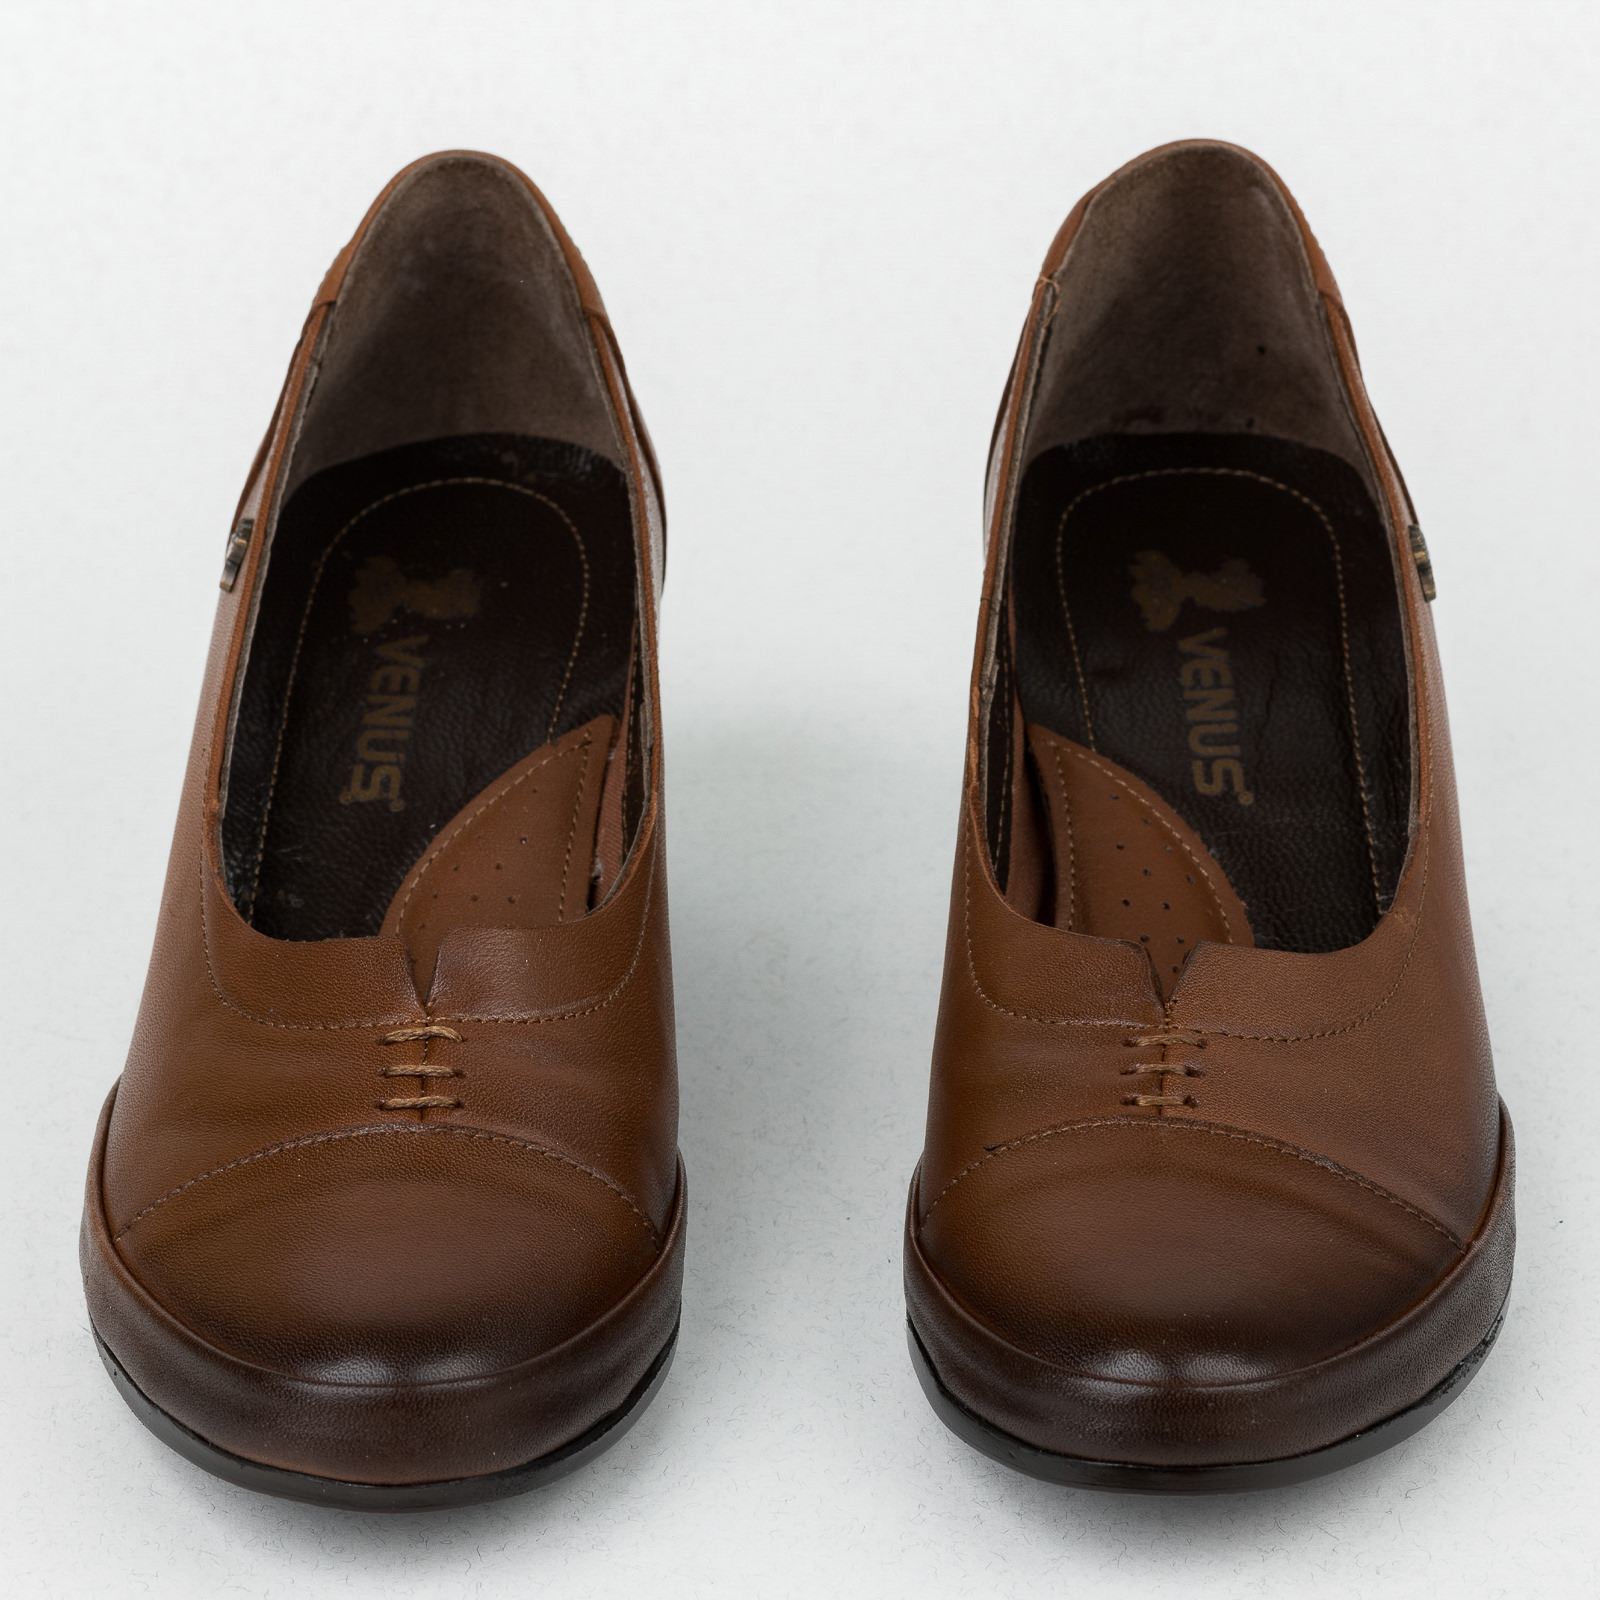 Leather high-heels B274 - BROWN